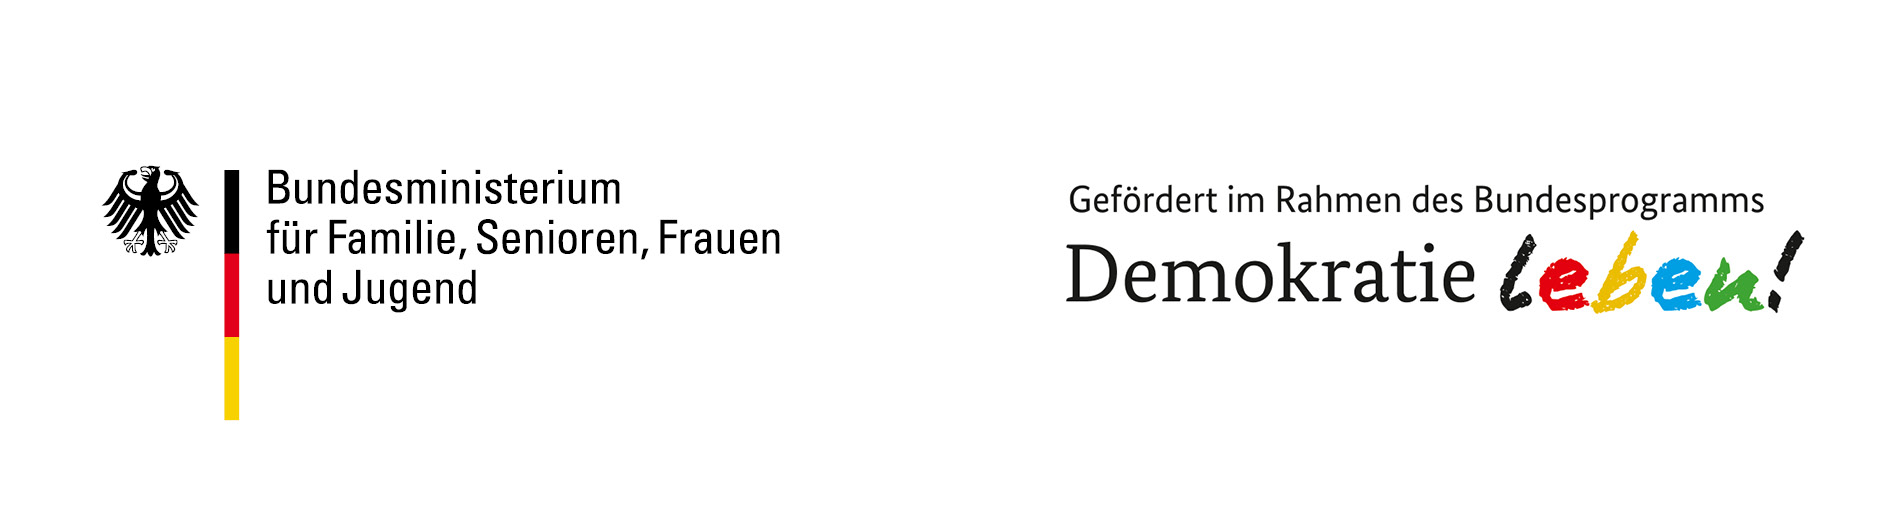 Logo BMFSFJ_DemokratieLeben